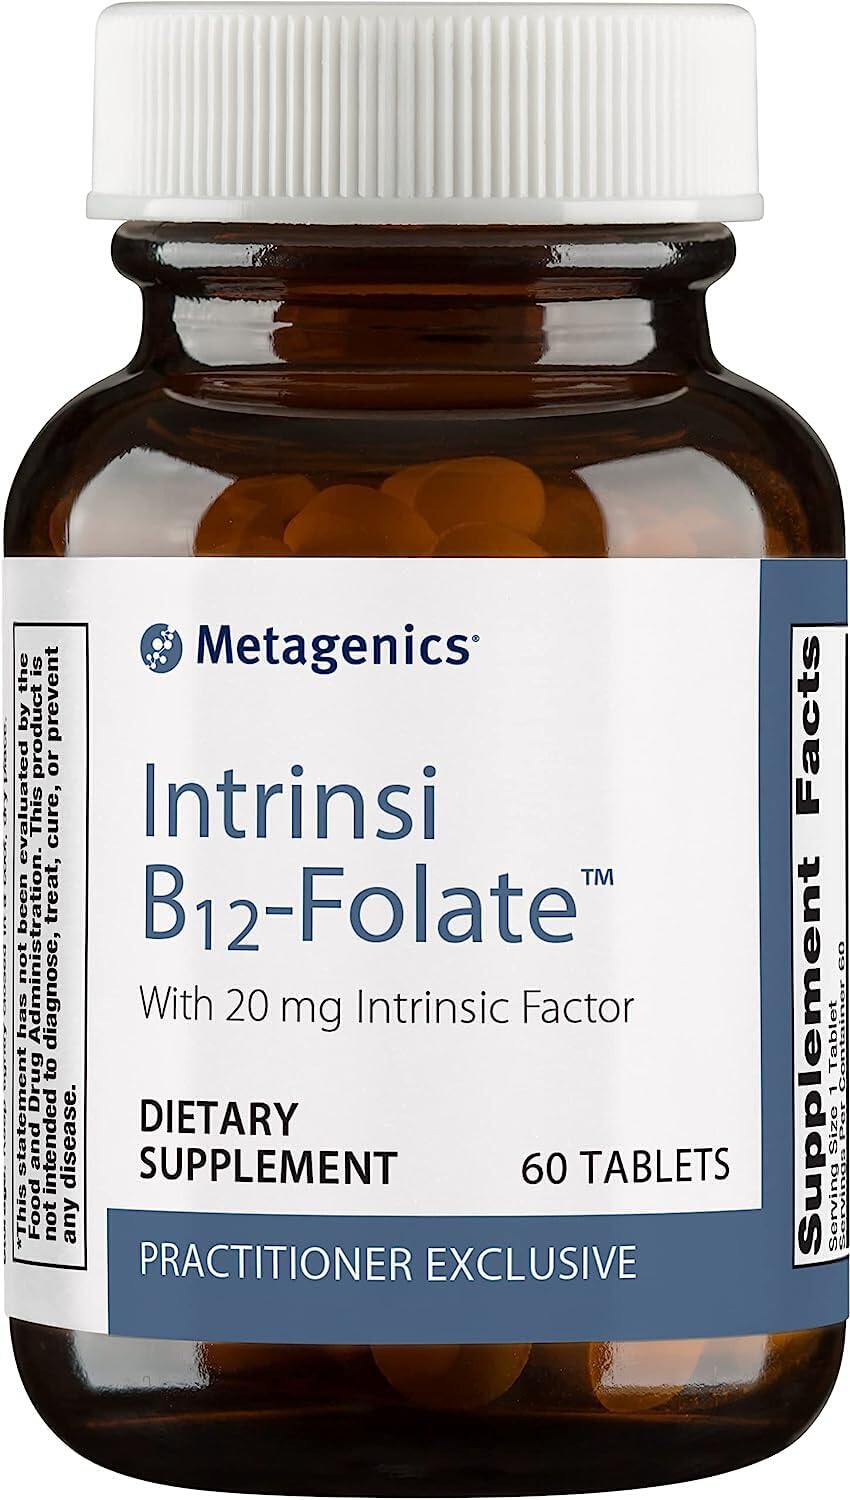 Metagenics Intrinsi B12-Folate Nervous System & Heart Health - 60 Tablets